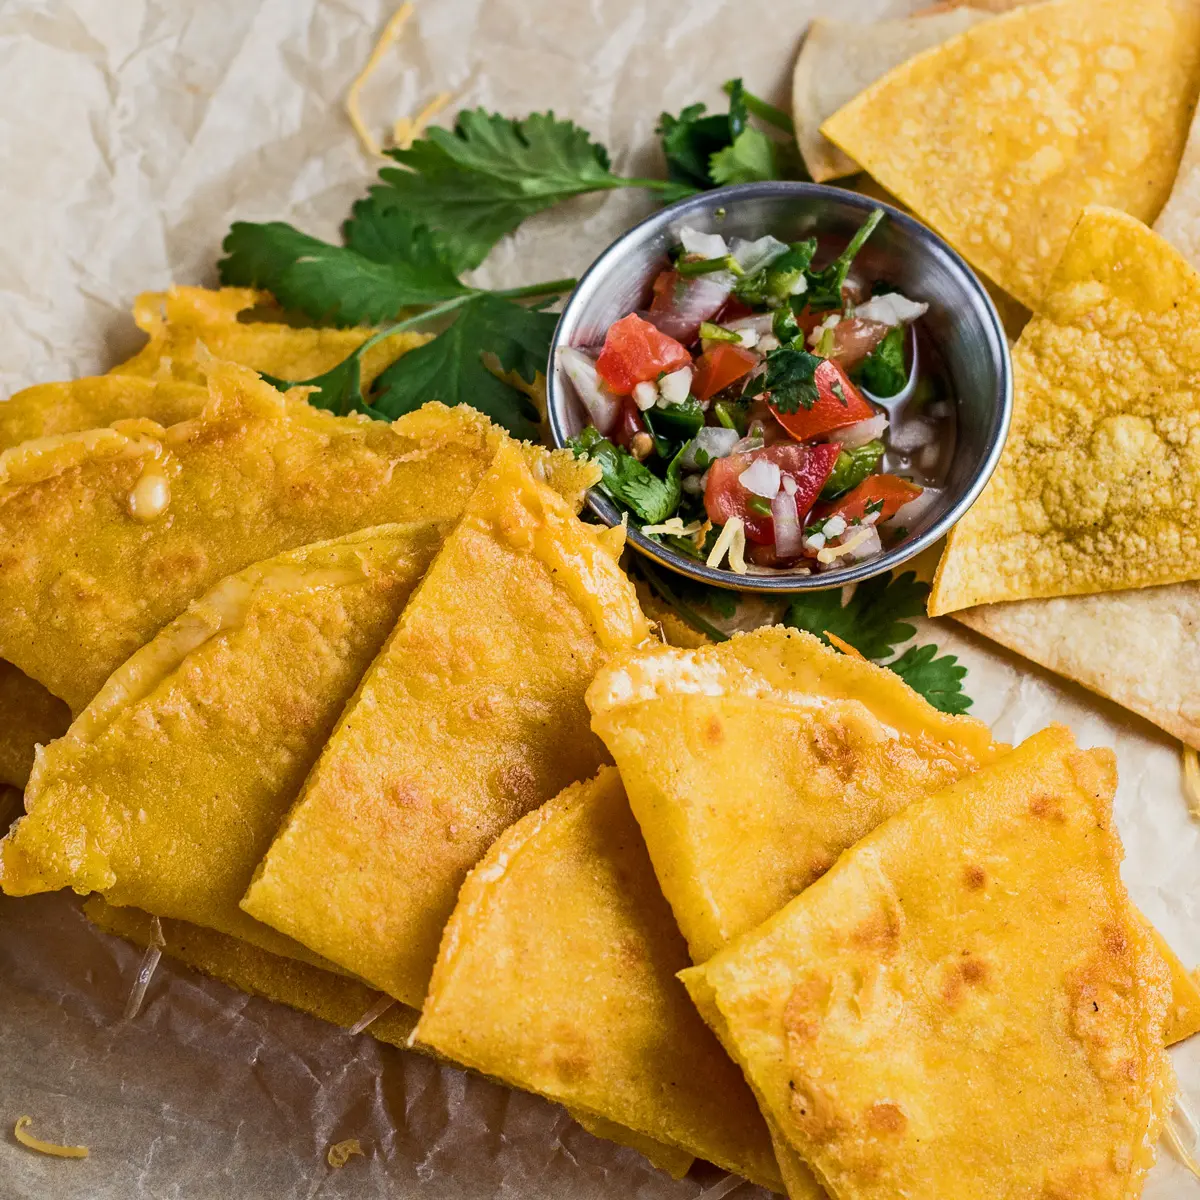 Mısır tortilla quesadillas dilimlenmiş ve pico de gallo ile servis edilir.